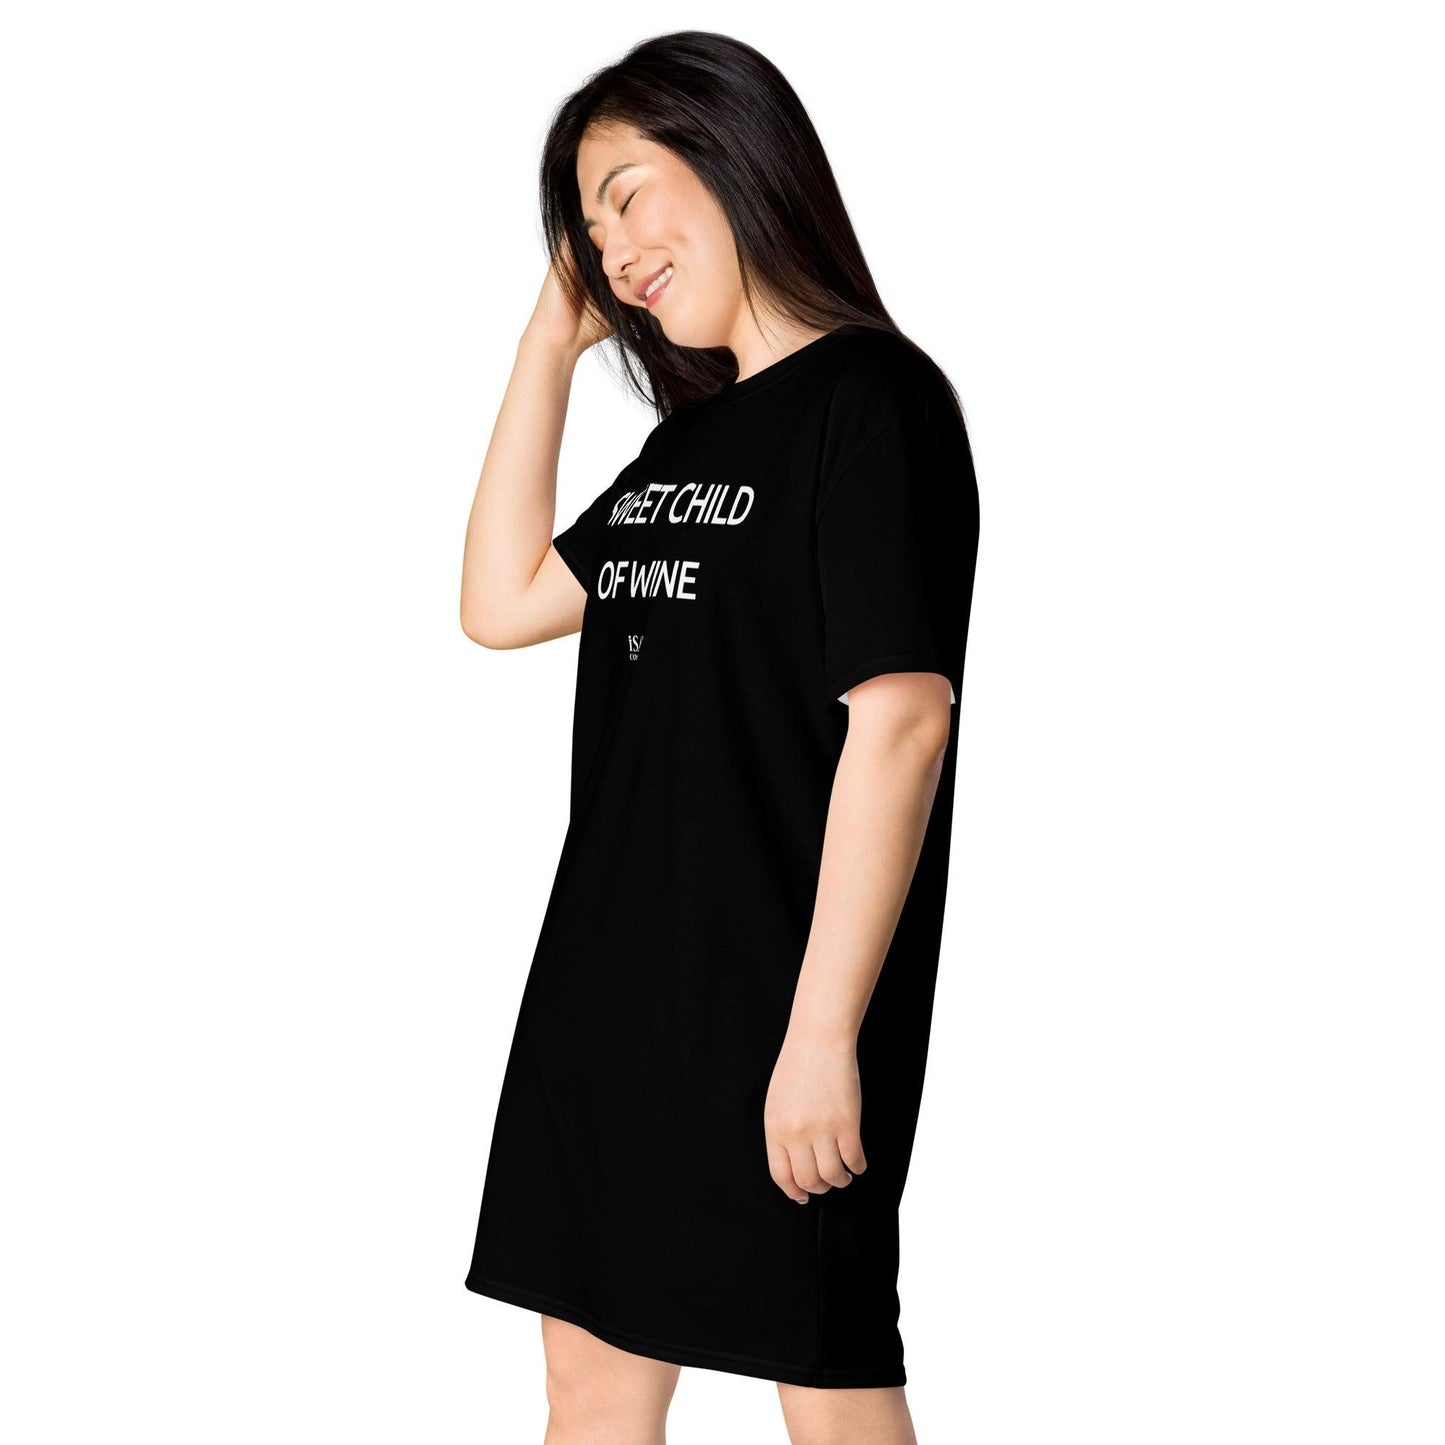 Sweet Child Of Wine - Womens Black T-Shirt Dress - iSAW Company